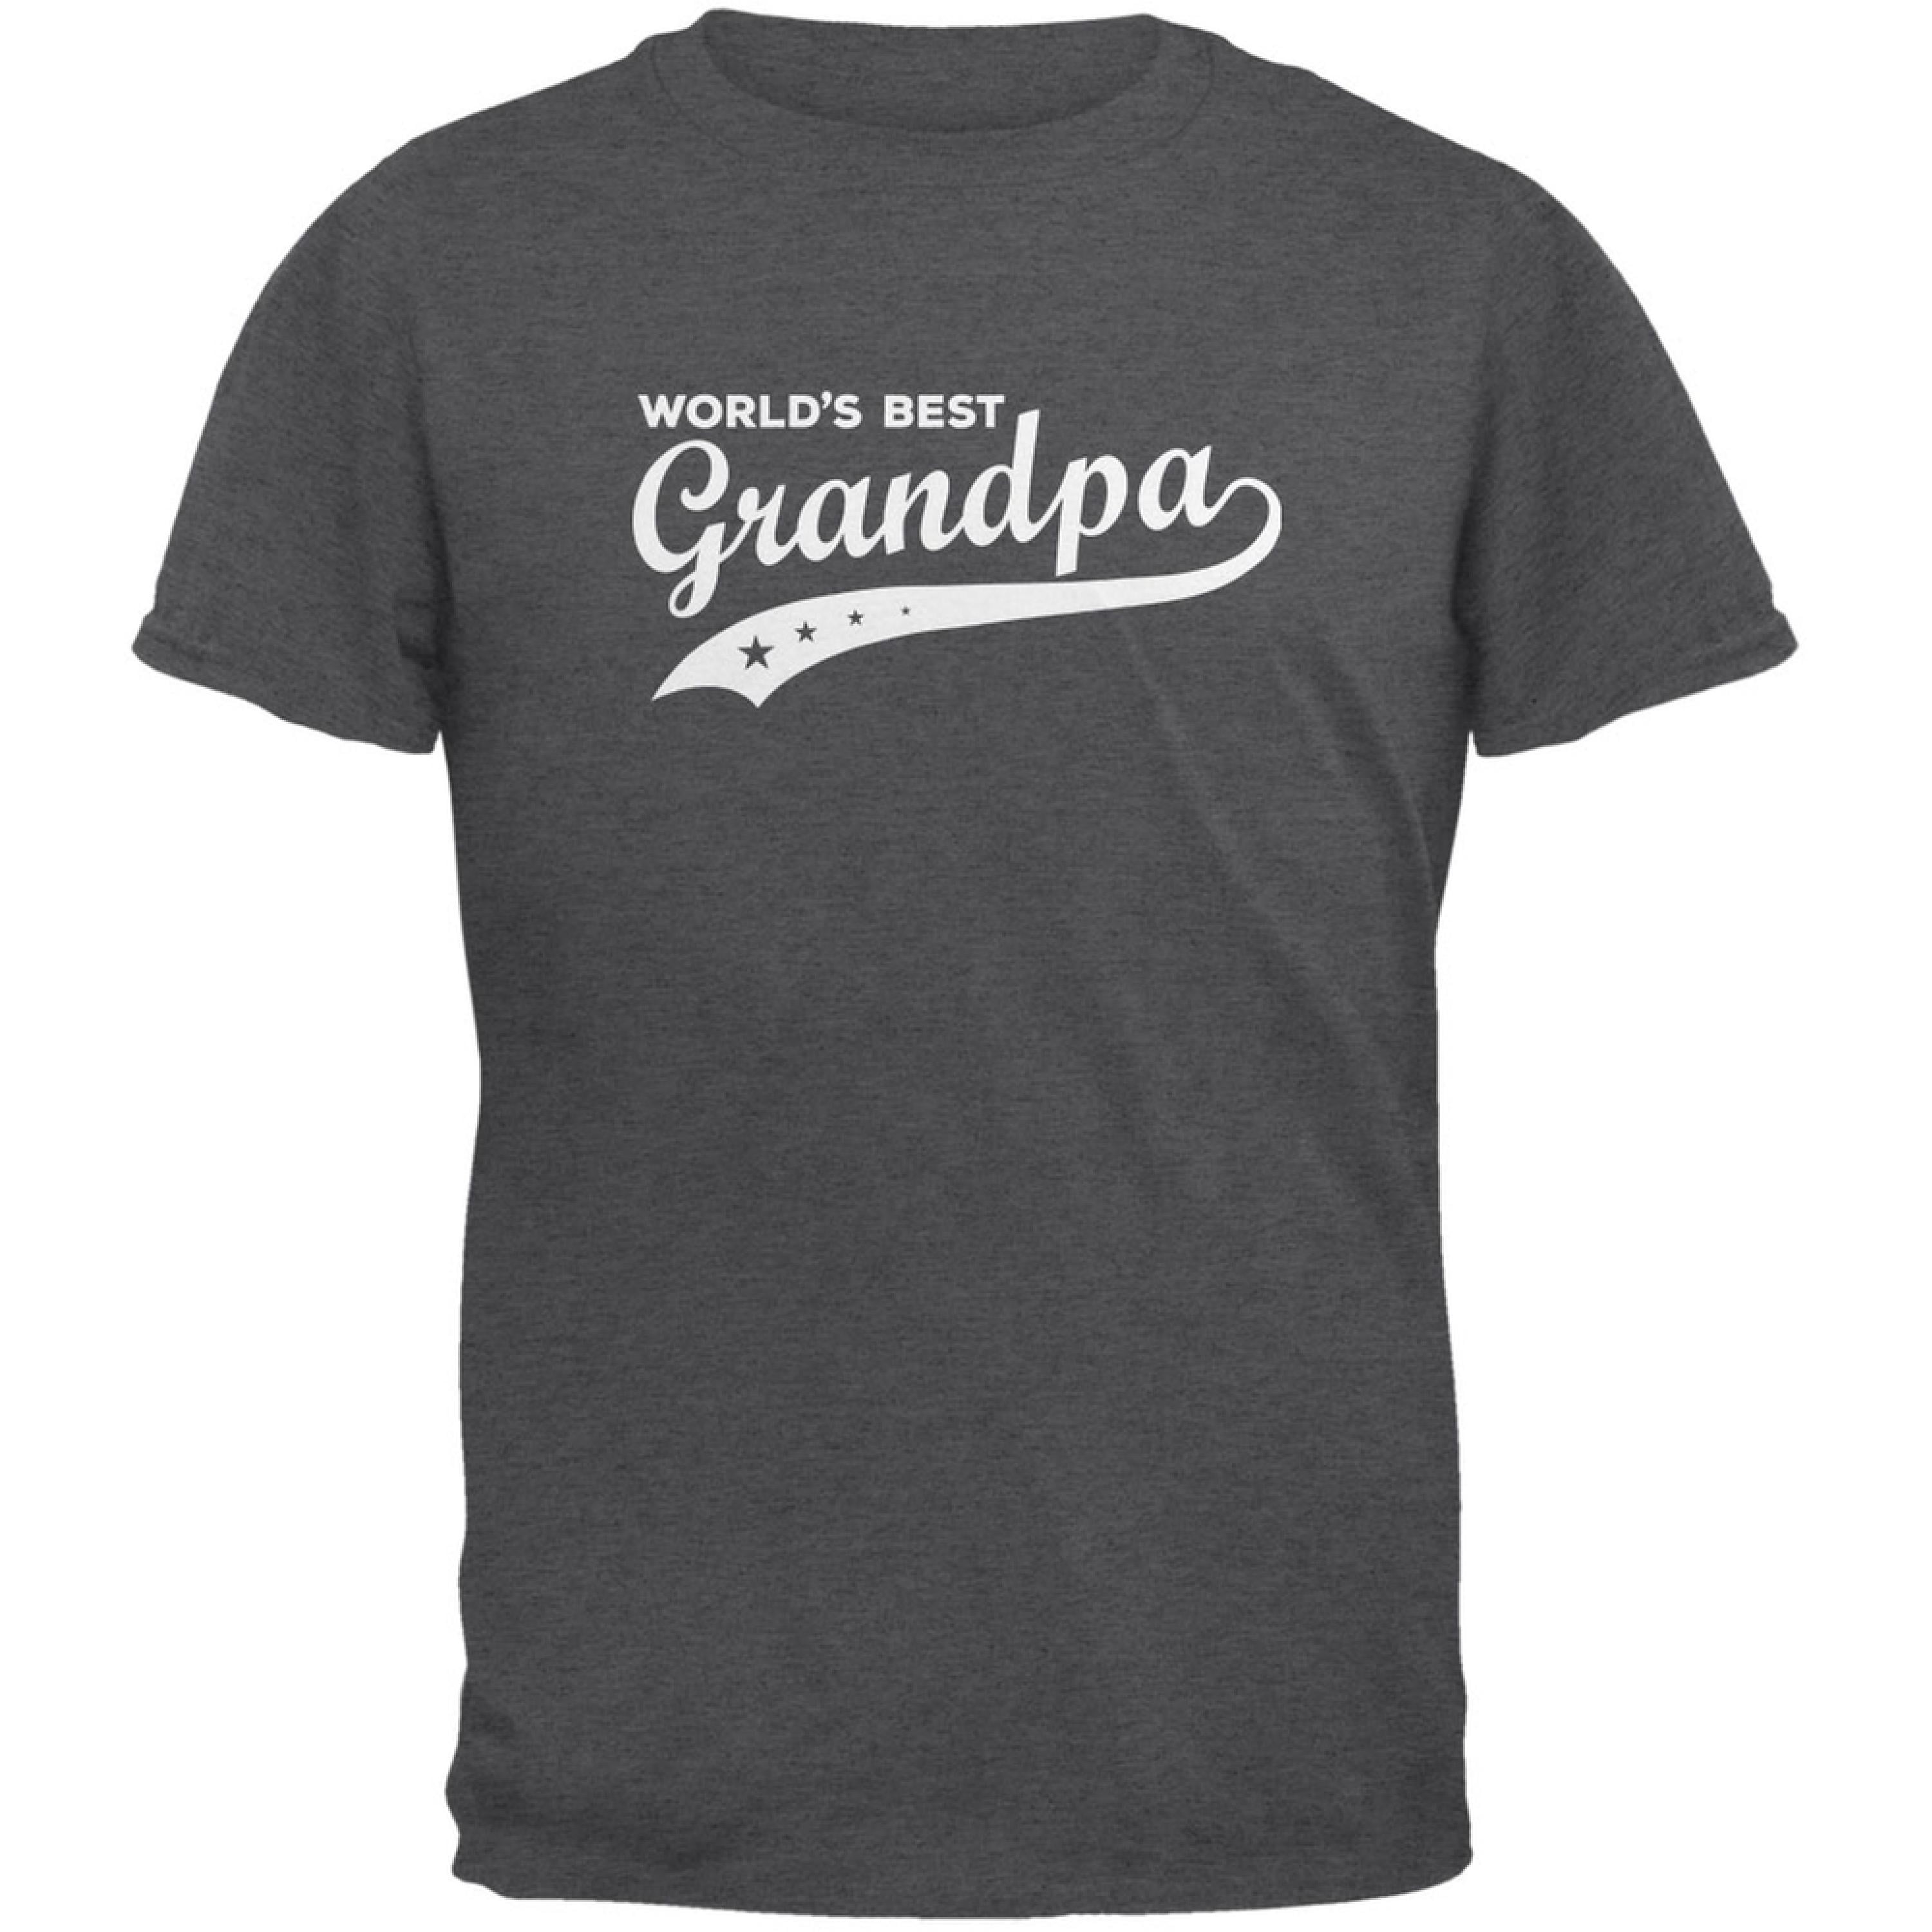 Download Holiday Father S Day World S Best Grandpa Dark Heather Adult T Shirt Walmart Com Walmart Com